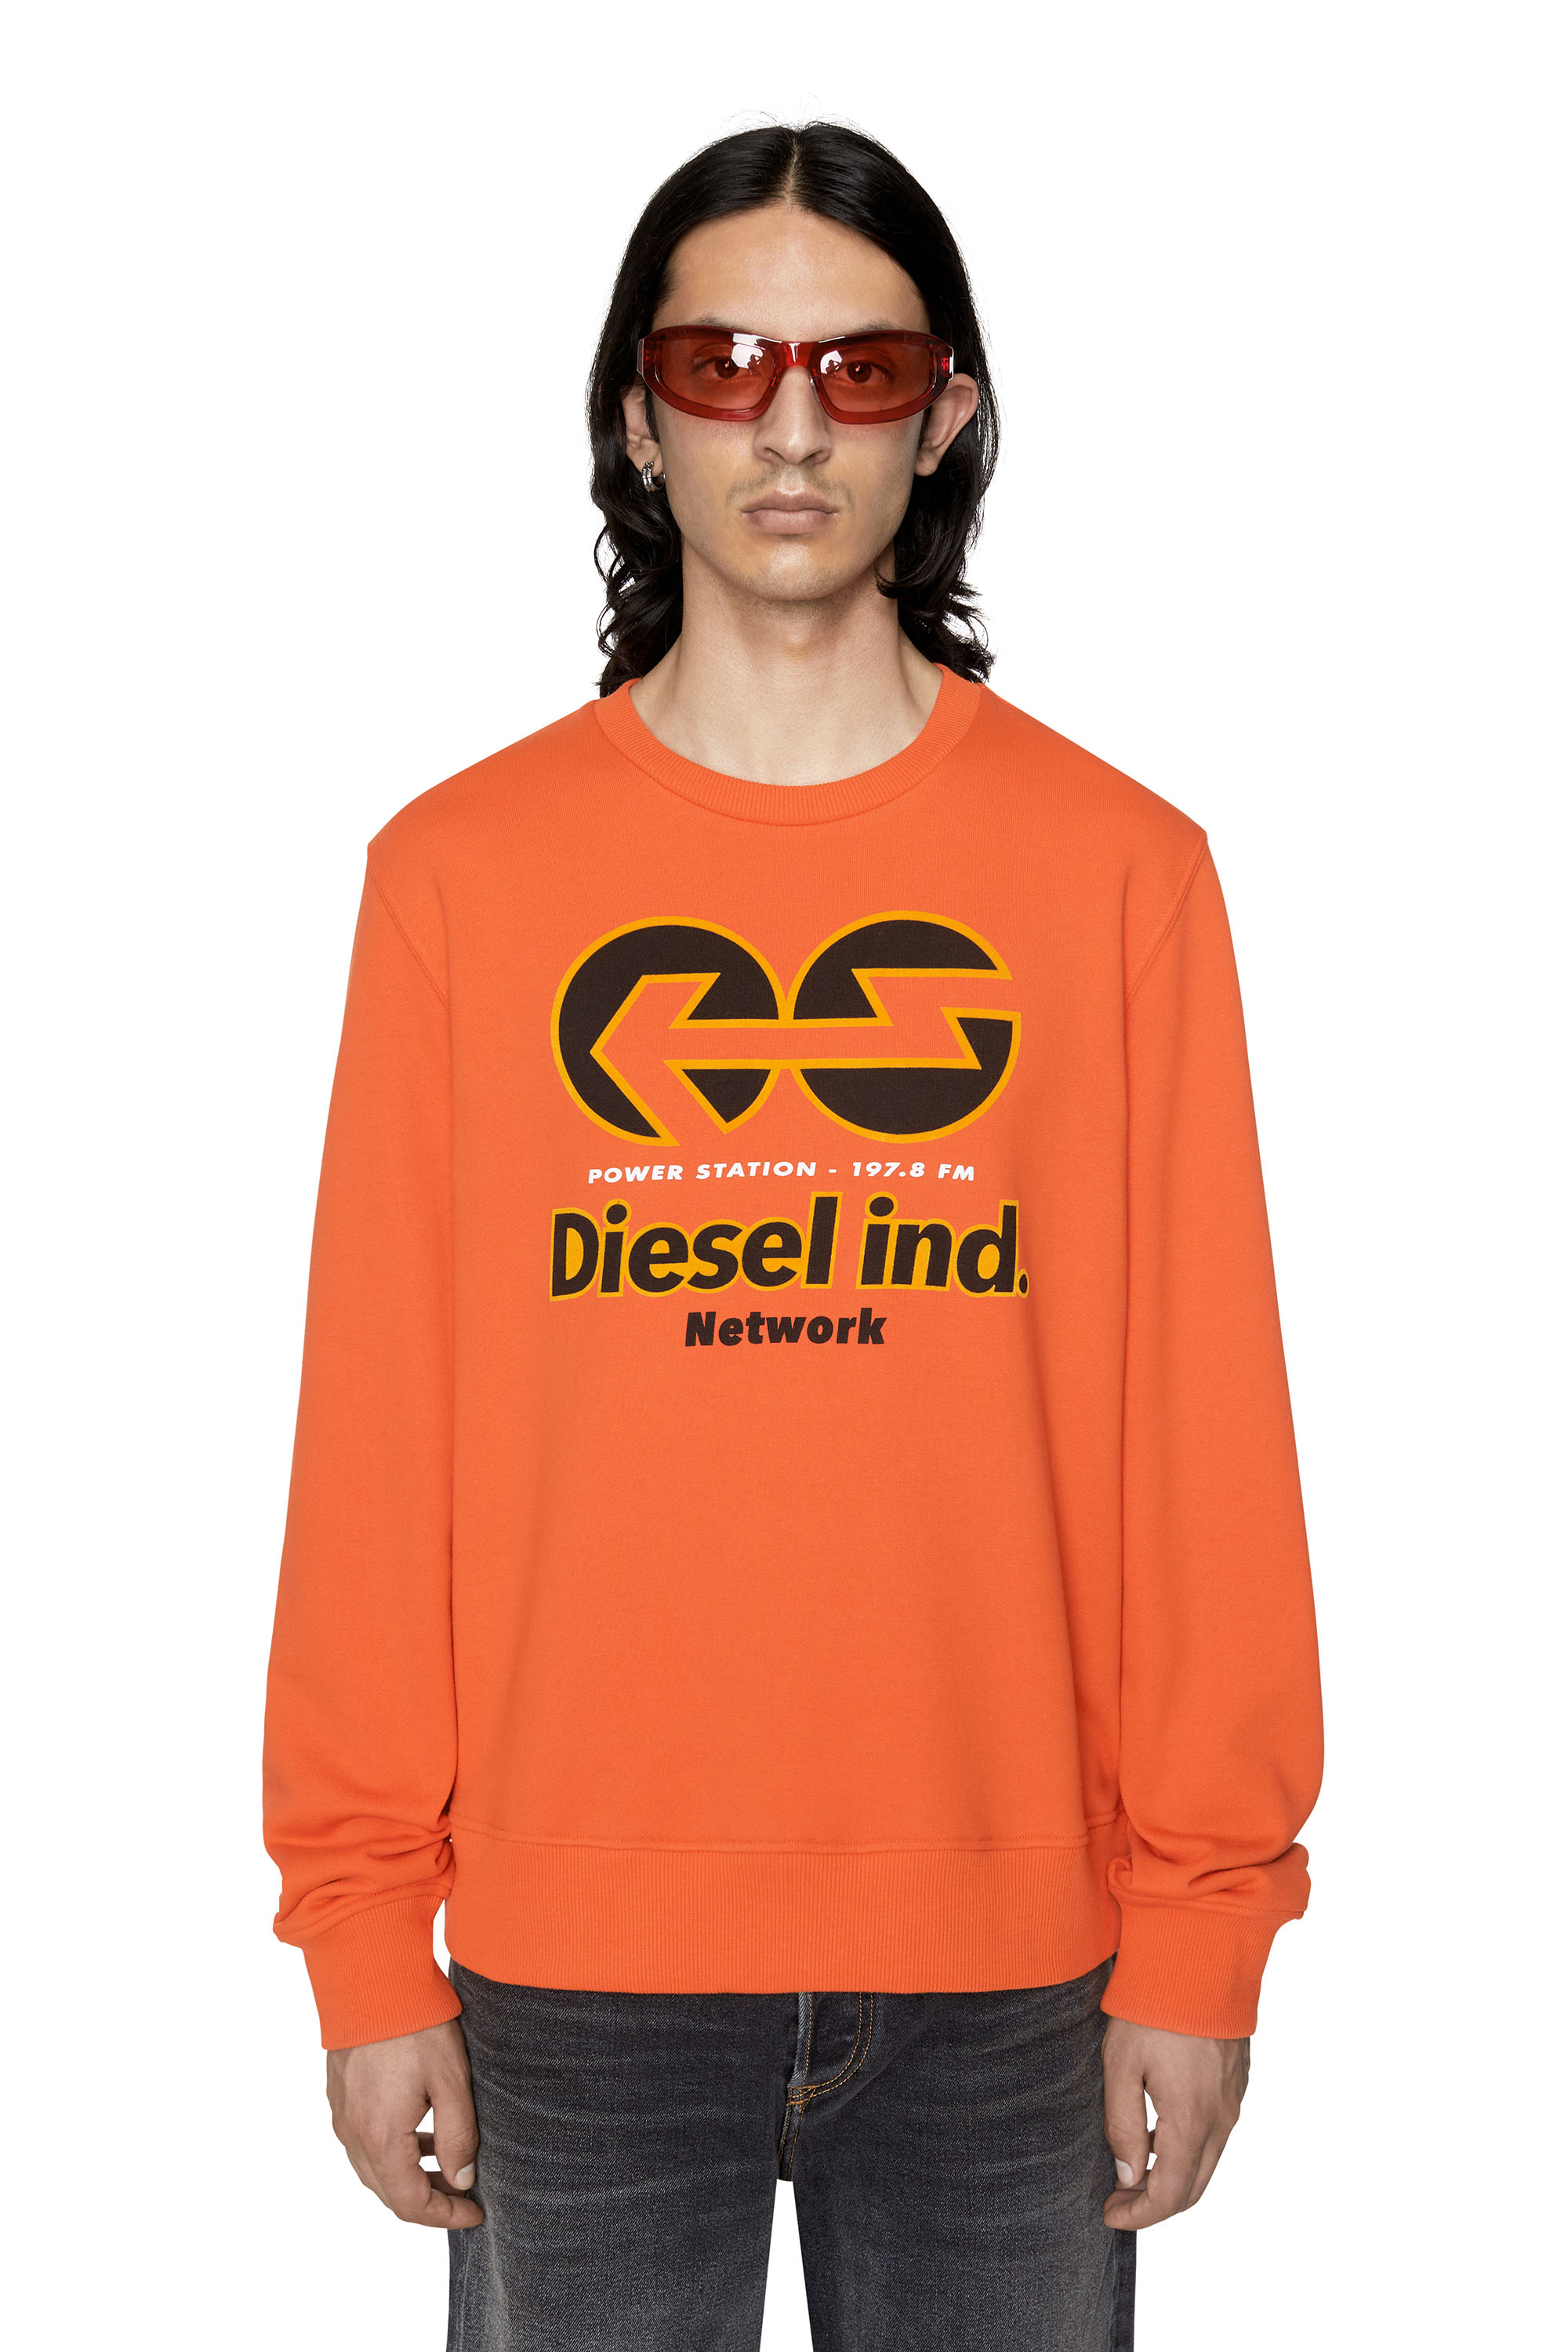 Diesel - Felpa con stampa Diesel Network - Felpe - Uomo - Arancione